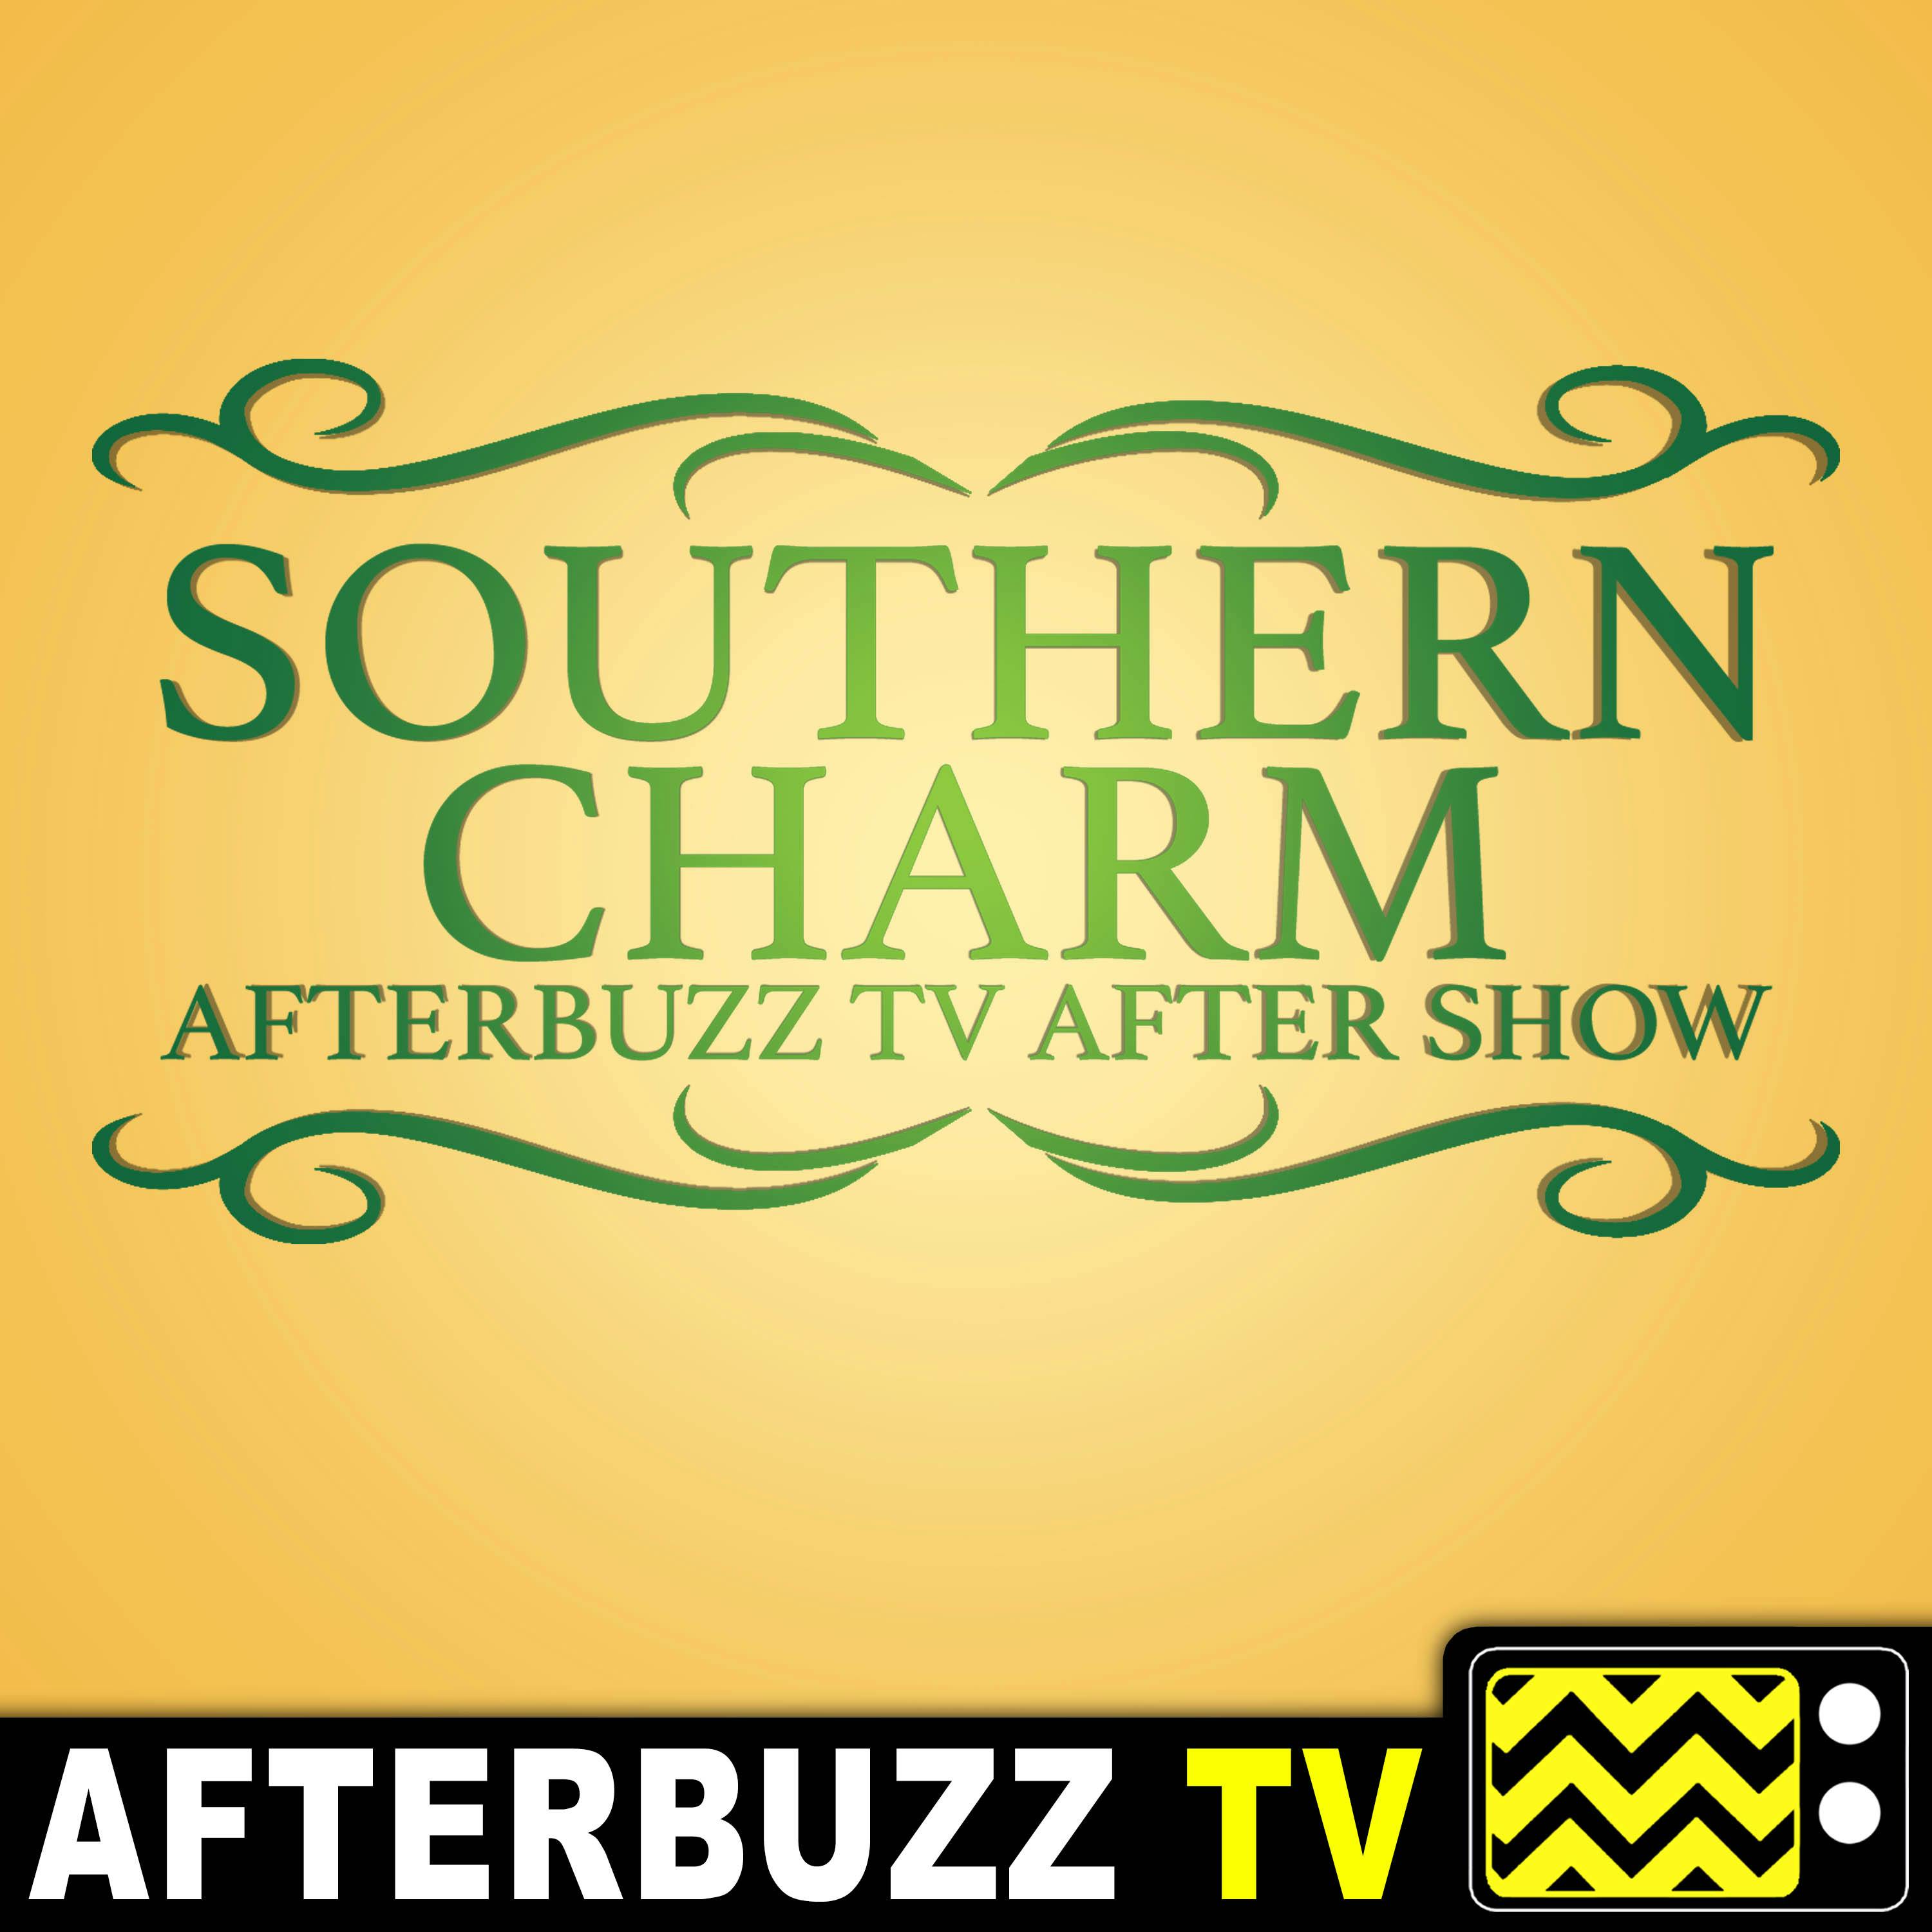 ”Outfoxed” Season 6 Episode 13 ’Southern Charm’ Review